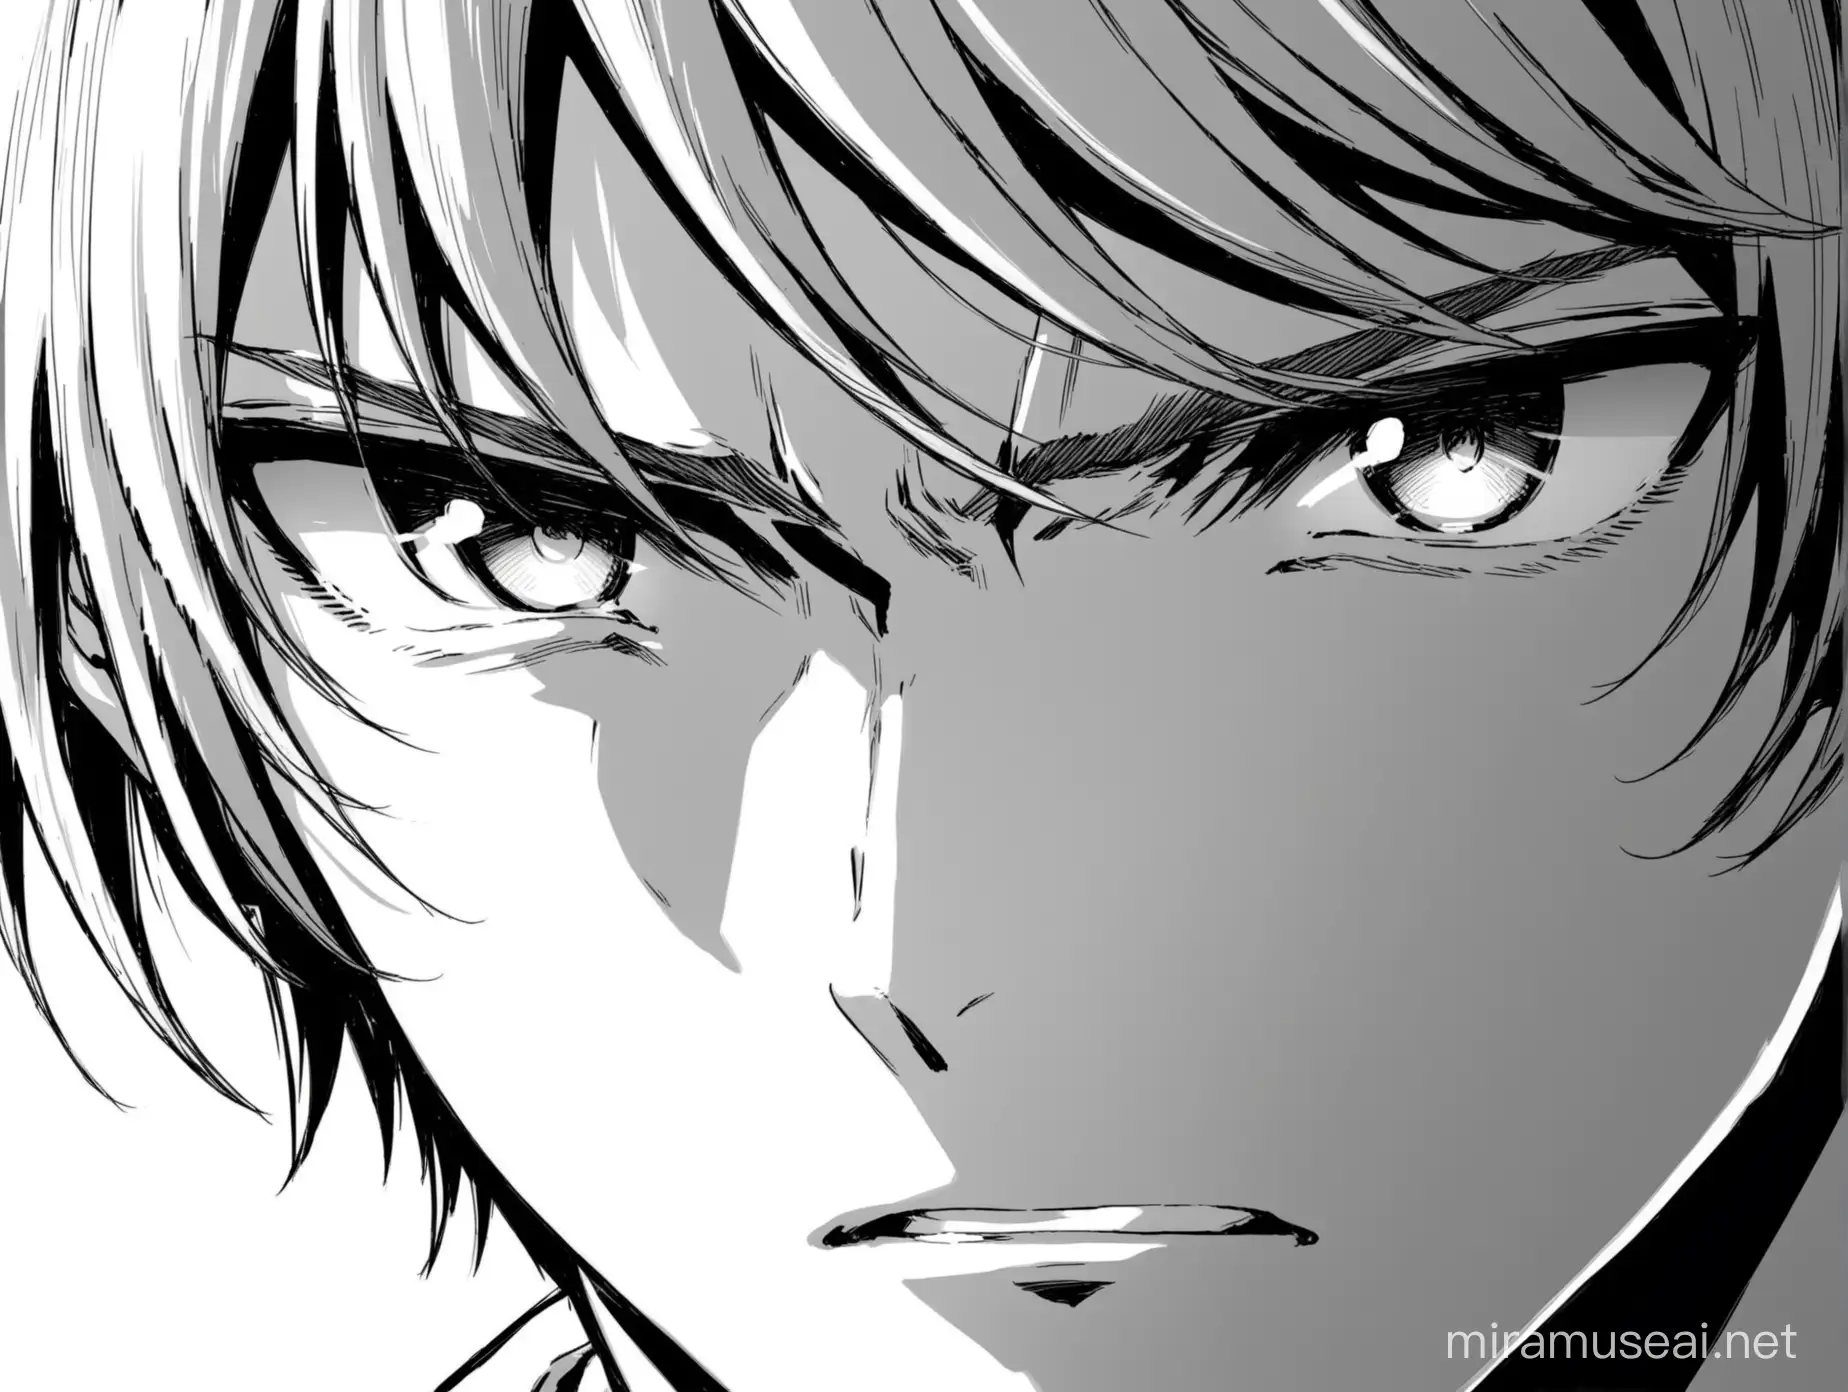 black and white manga illustration of close up male anime face